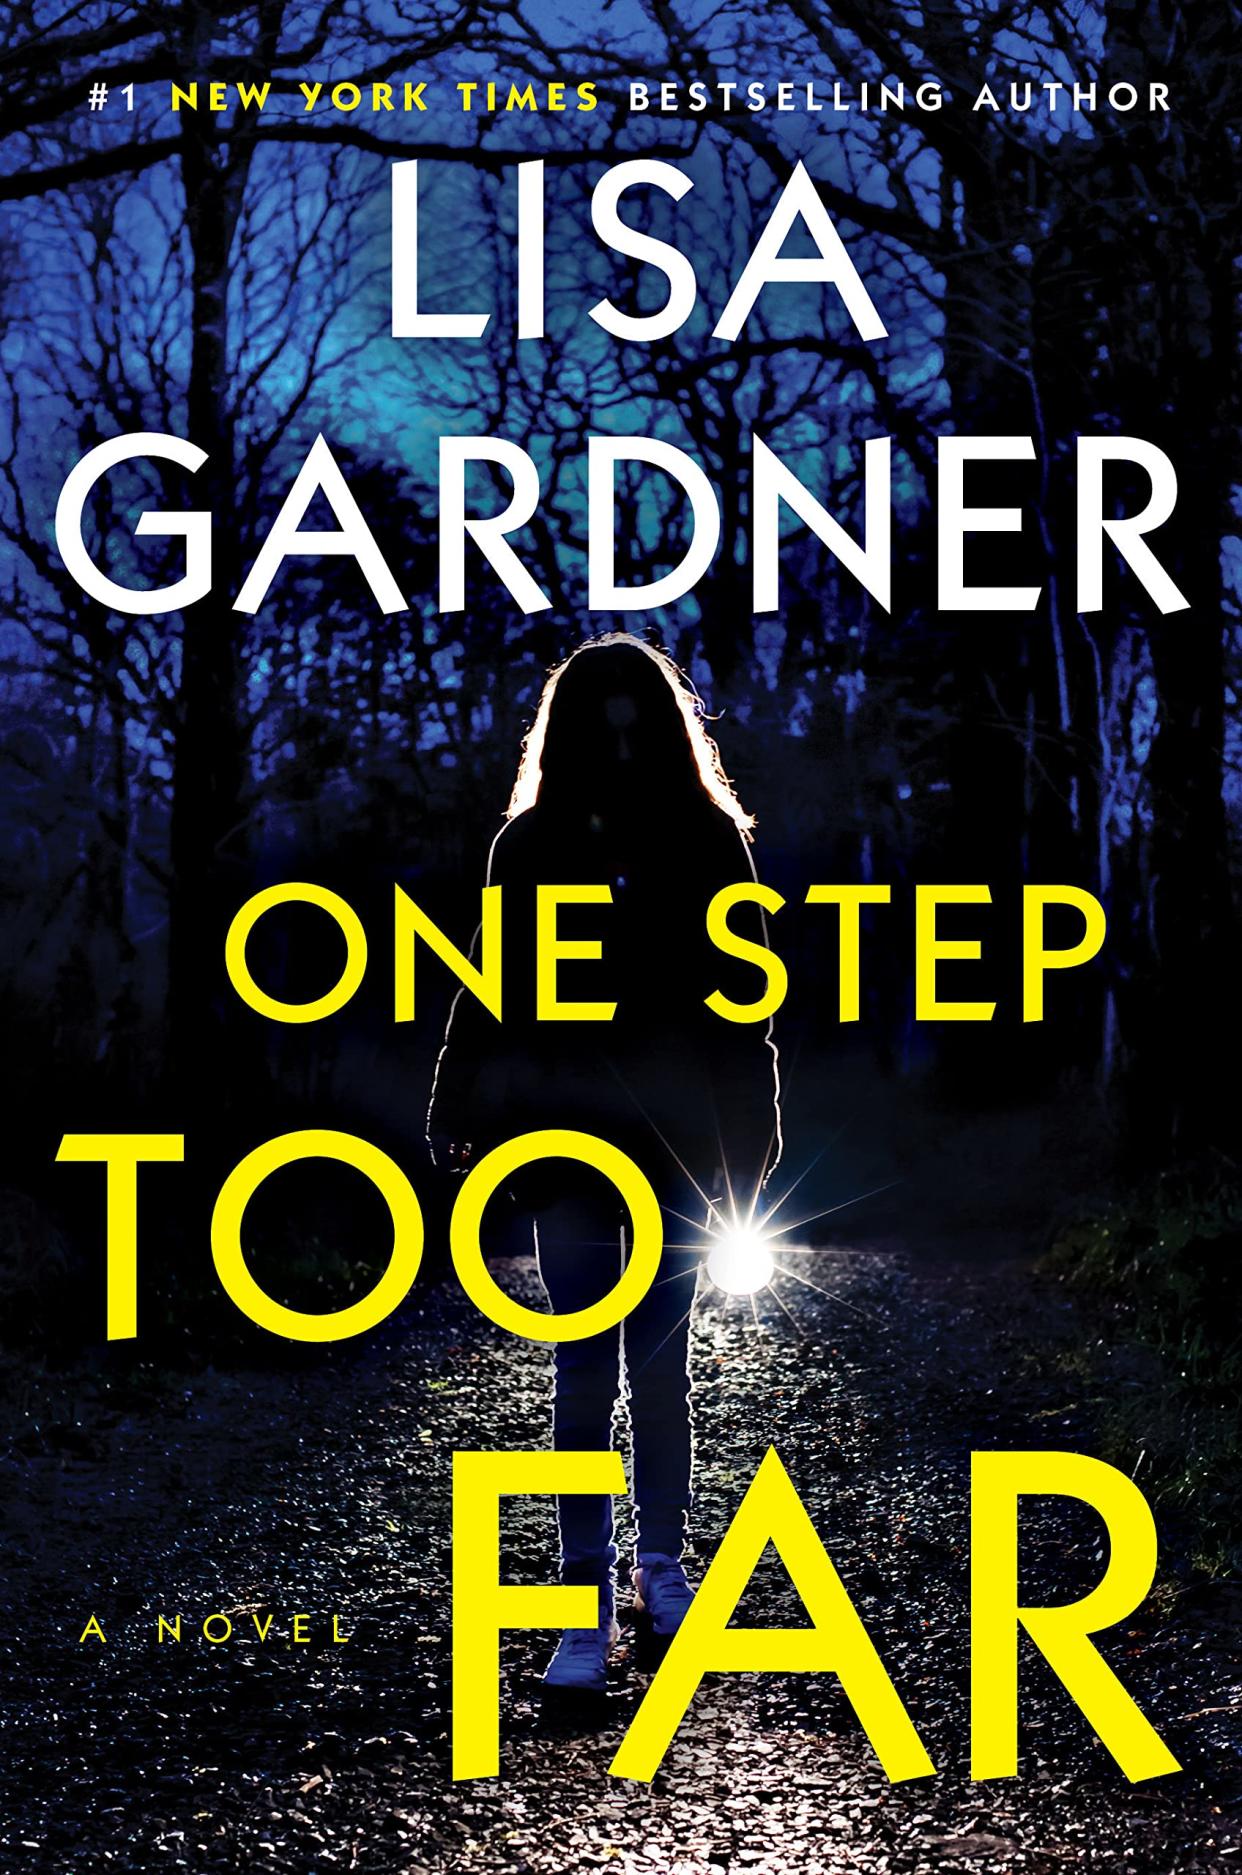 "One Step Too Far" by Lisa Gardner